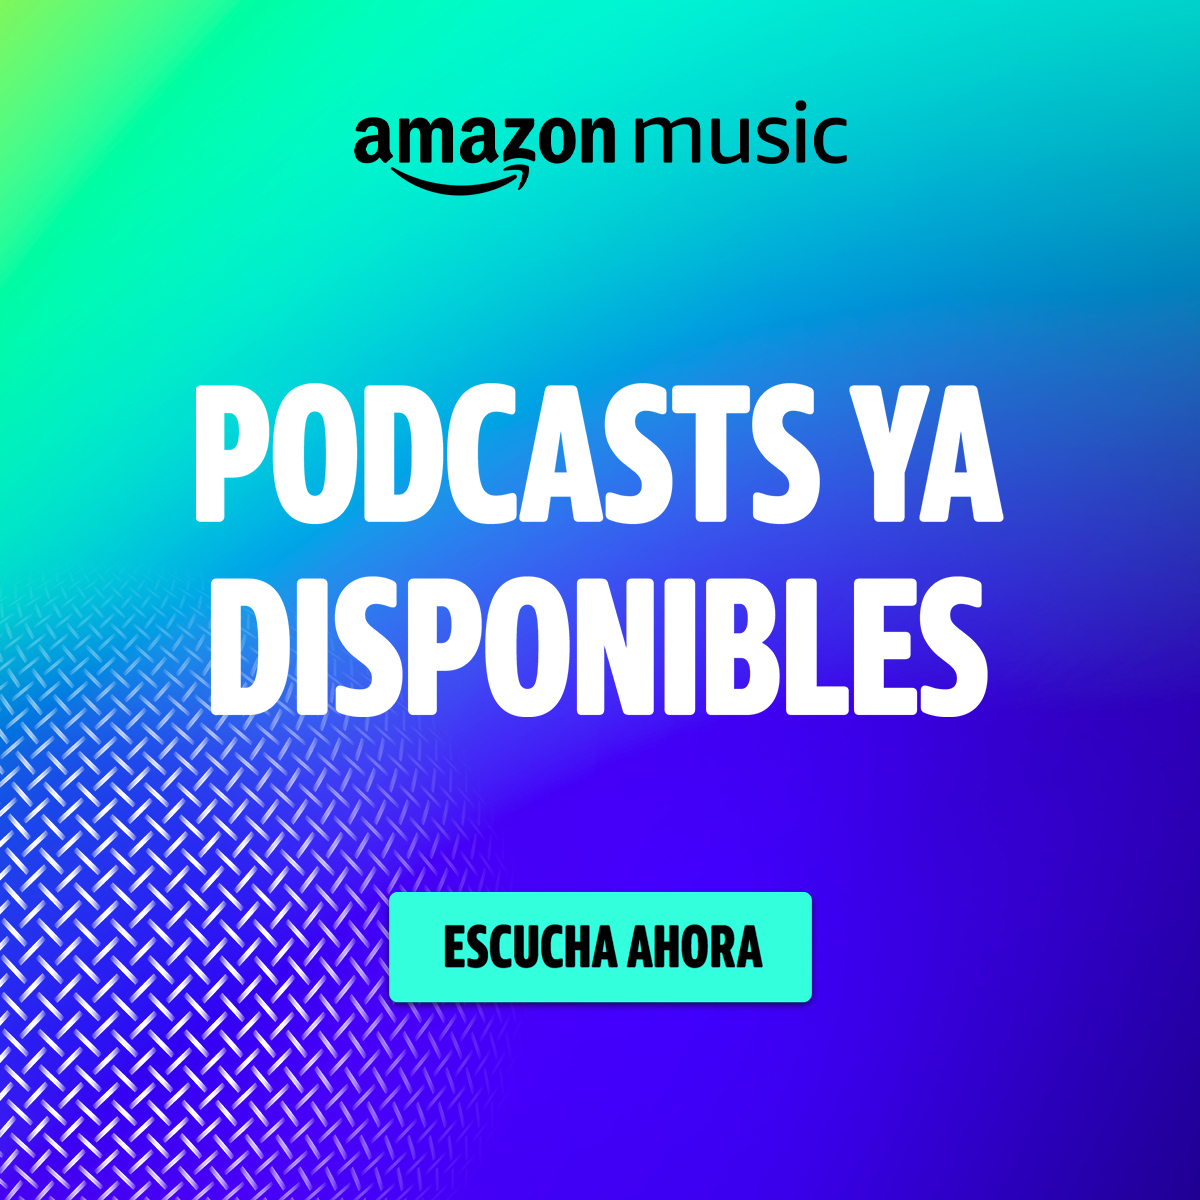 Podcasts ya Disponibles en Amazon Music